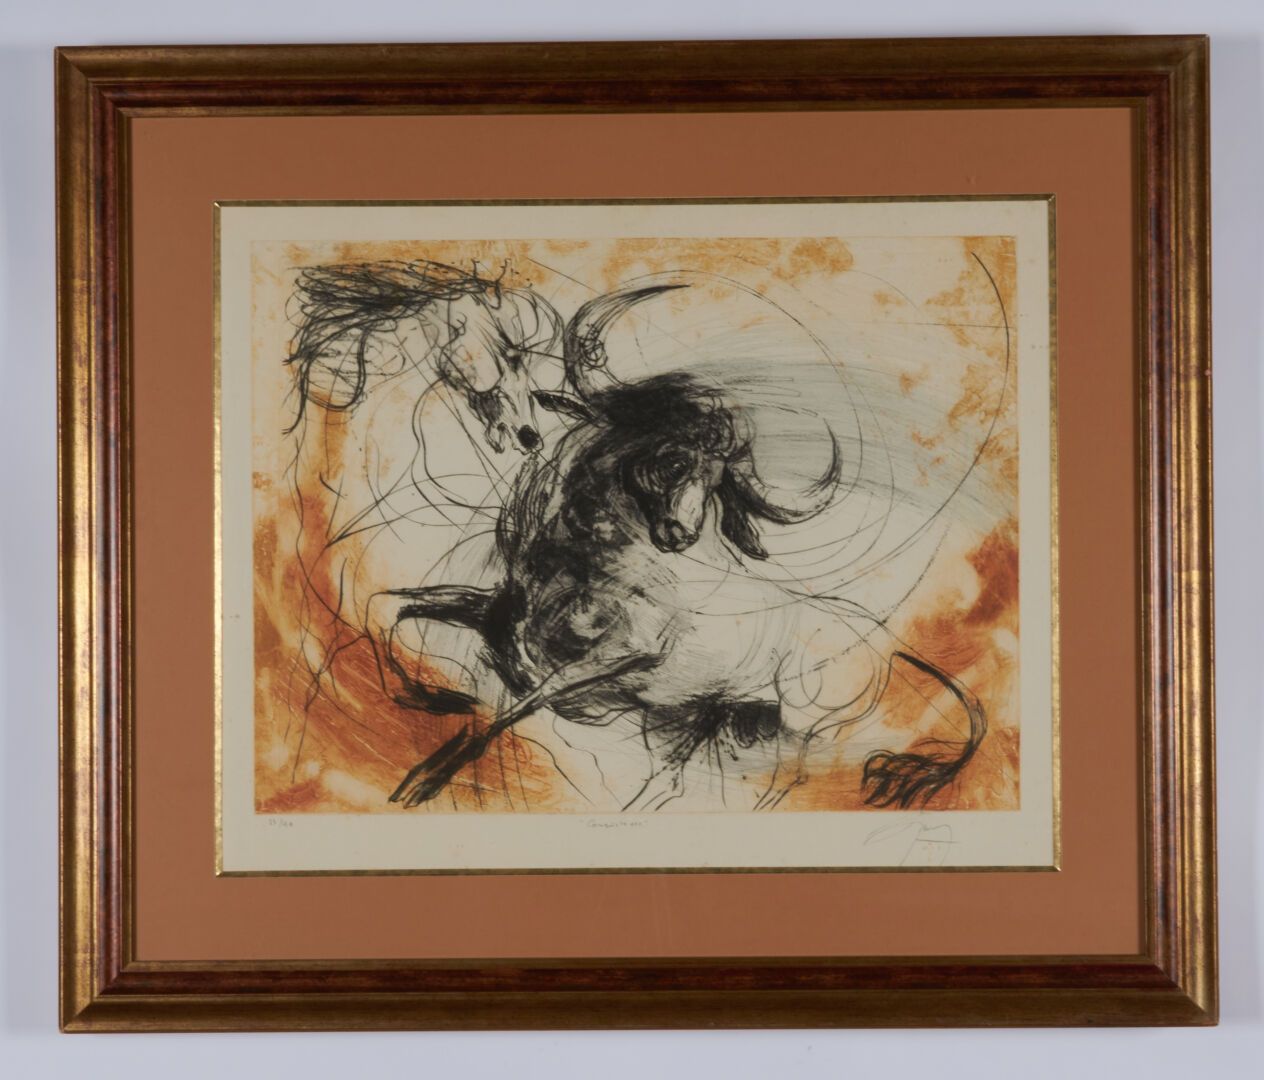 Null GUINY Jean Marie (1954-2010)

"Toro" litografia - 52x66